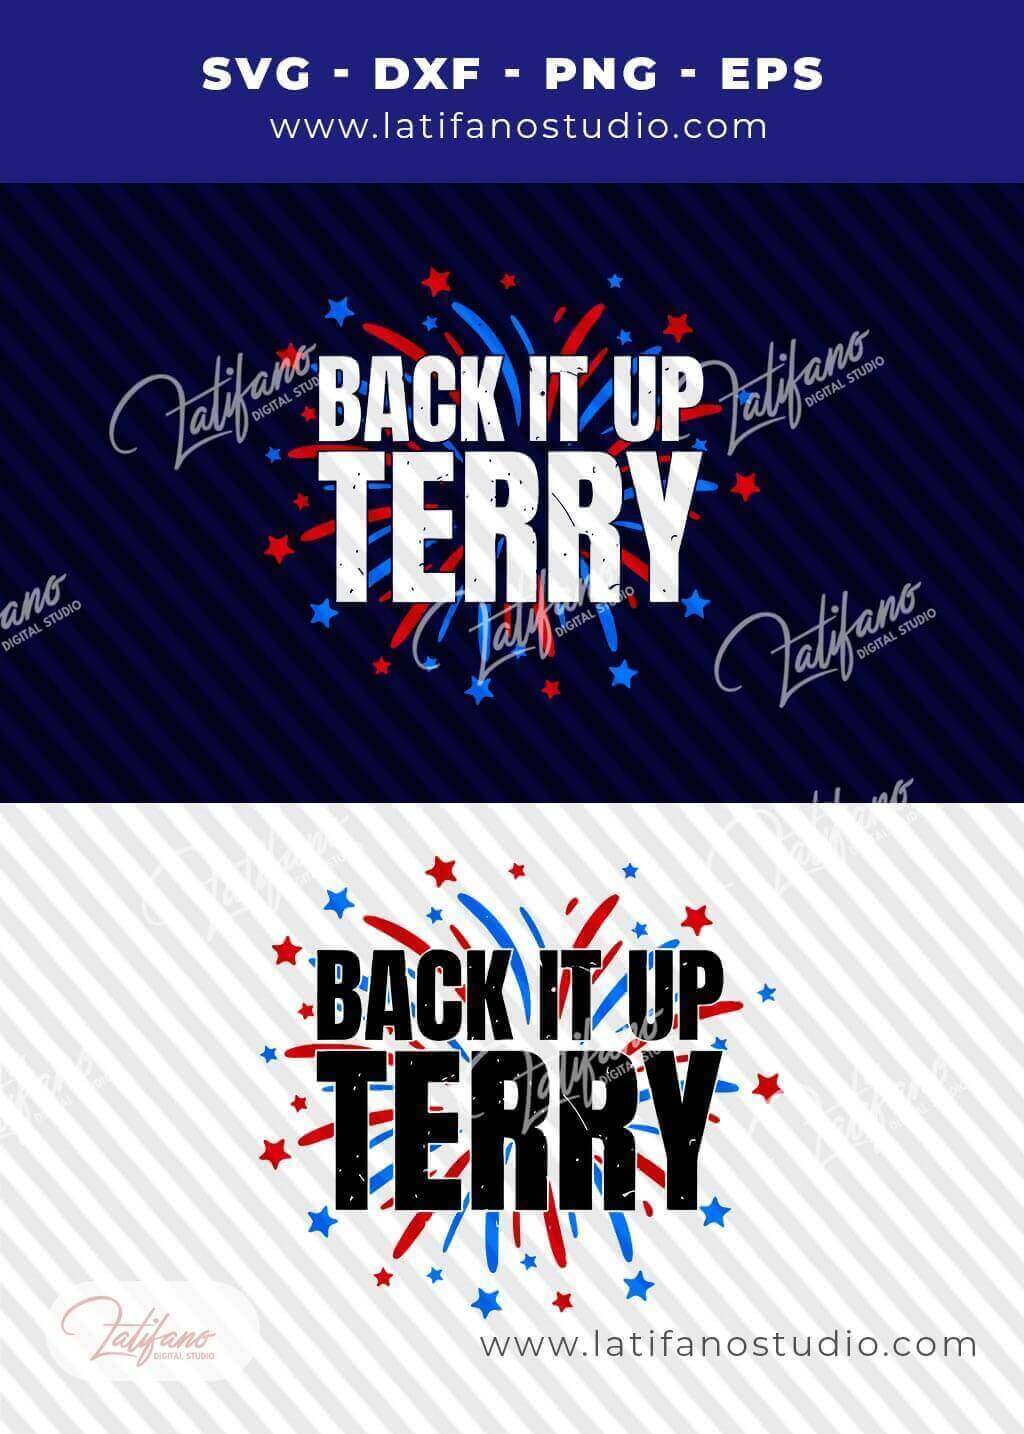 Back it up terry SVG Design